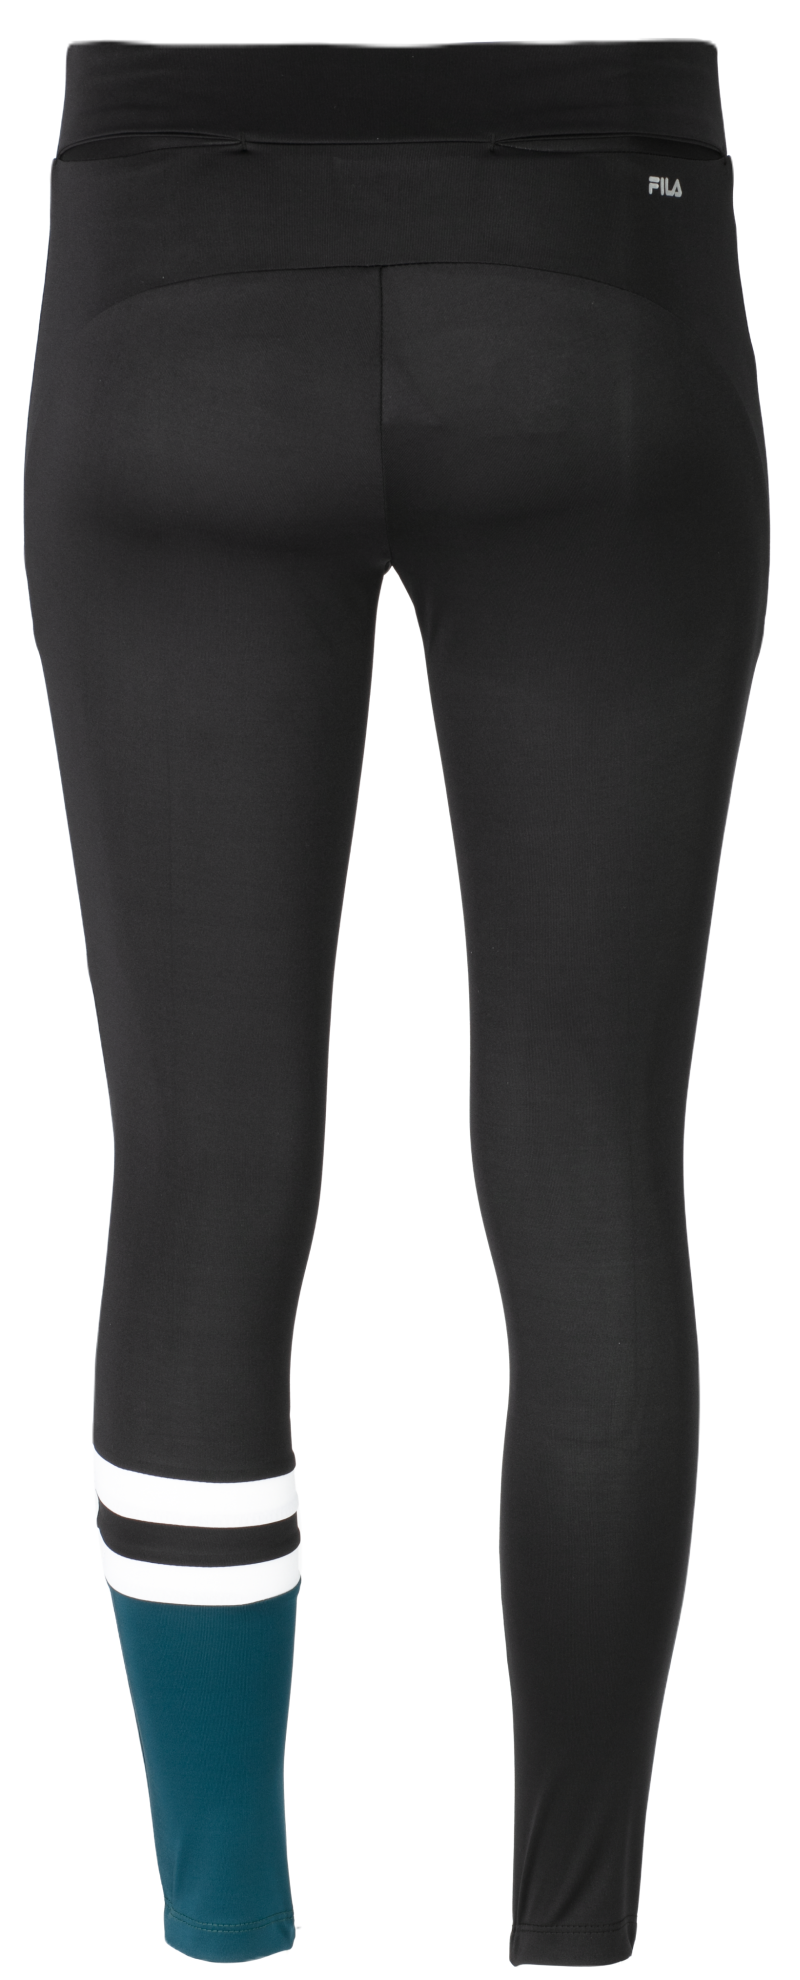 Women's leggings Fila Leggings Erica - black/deep teal